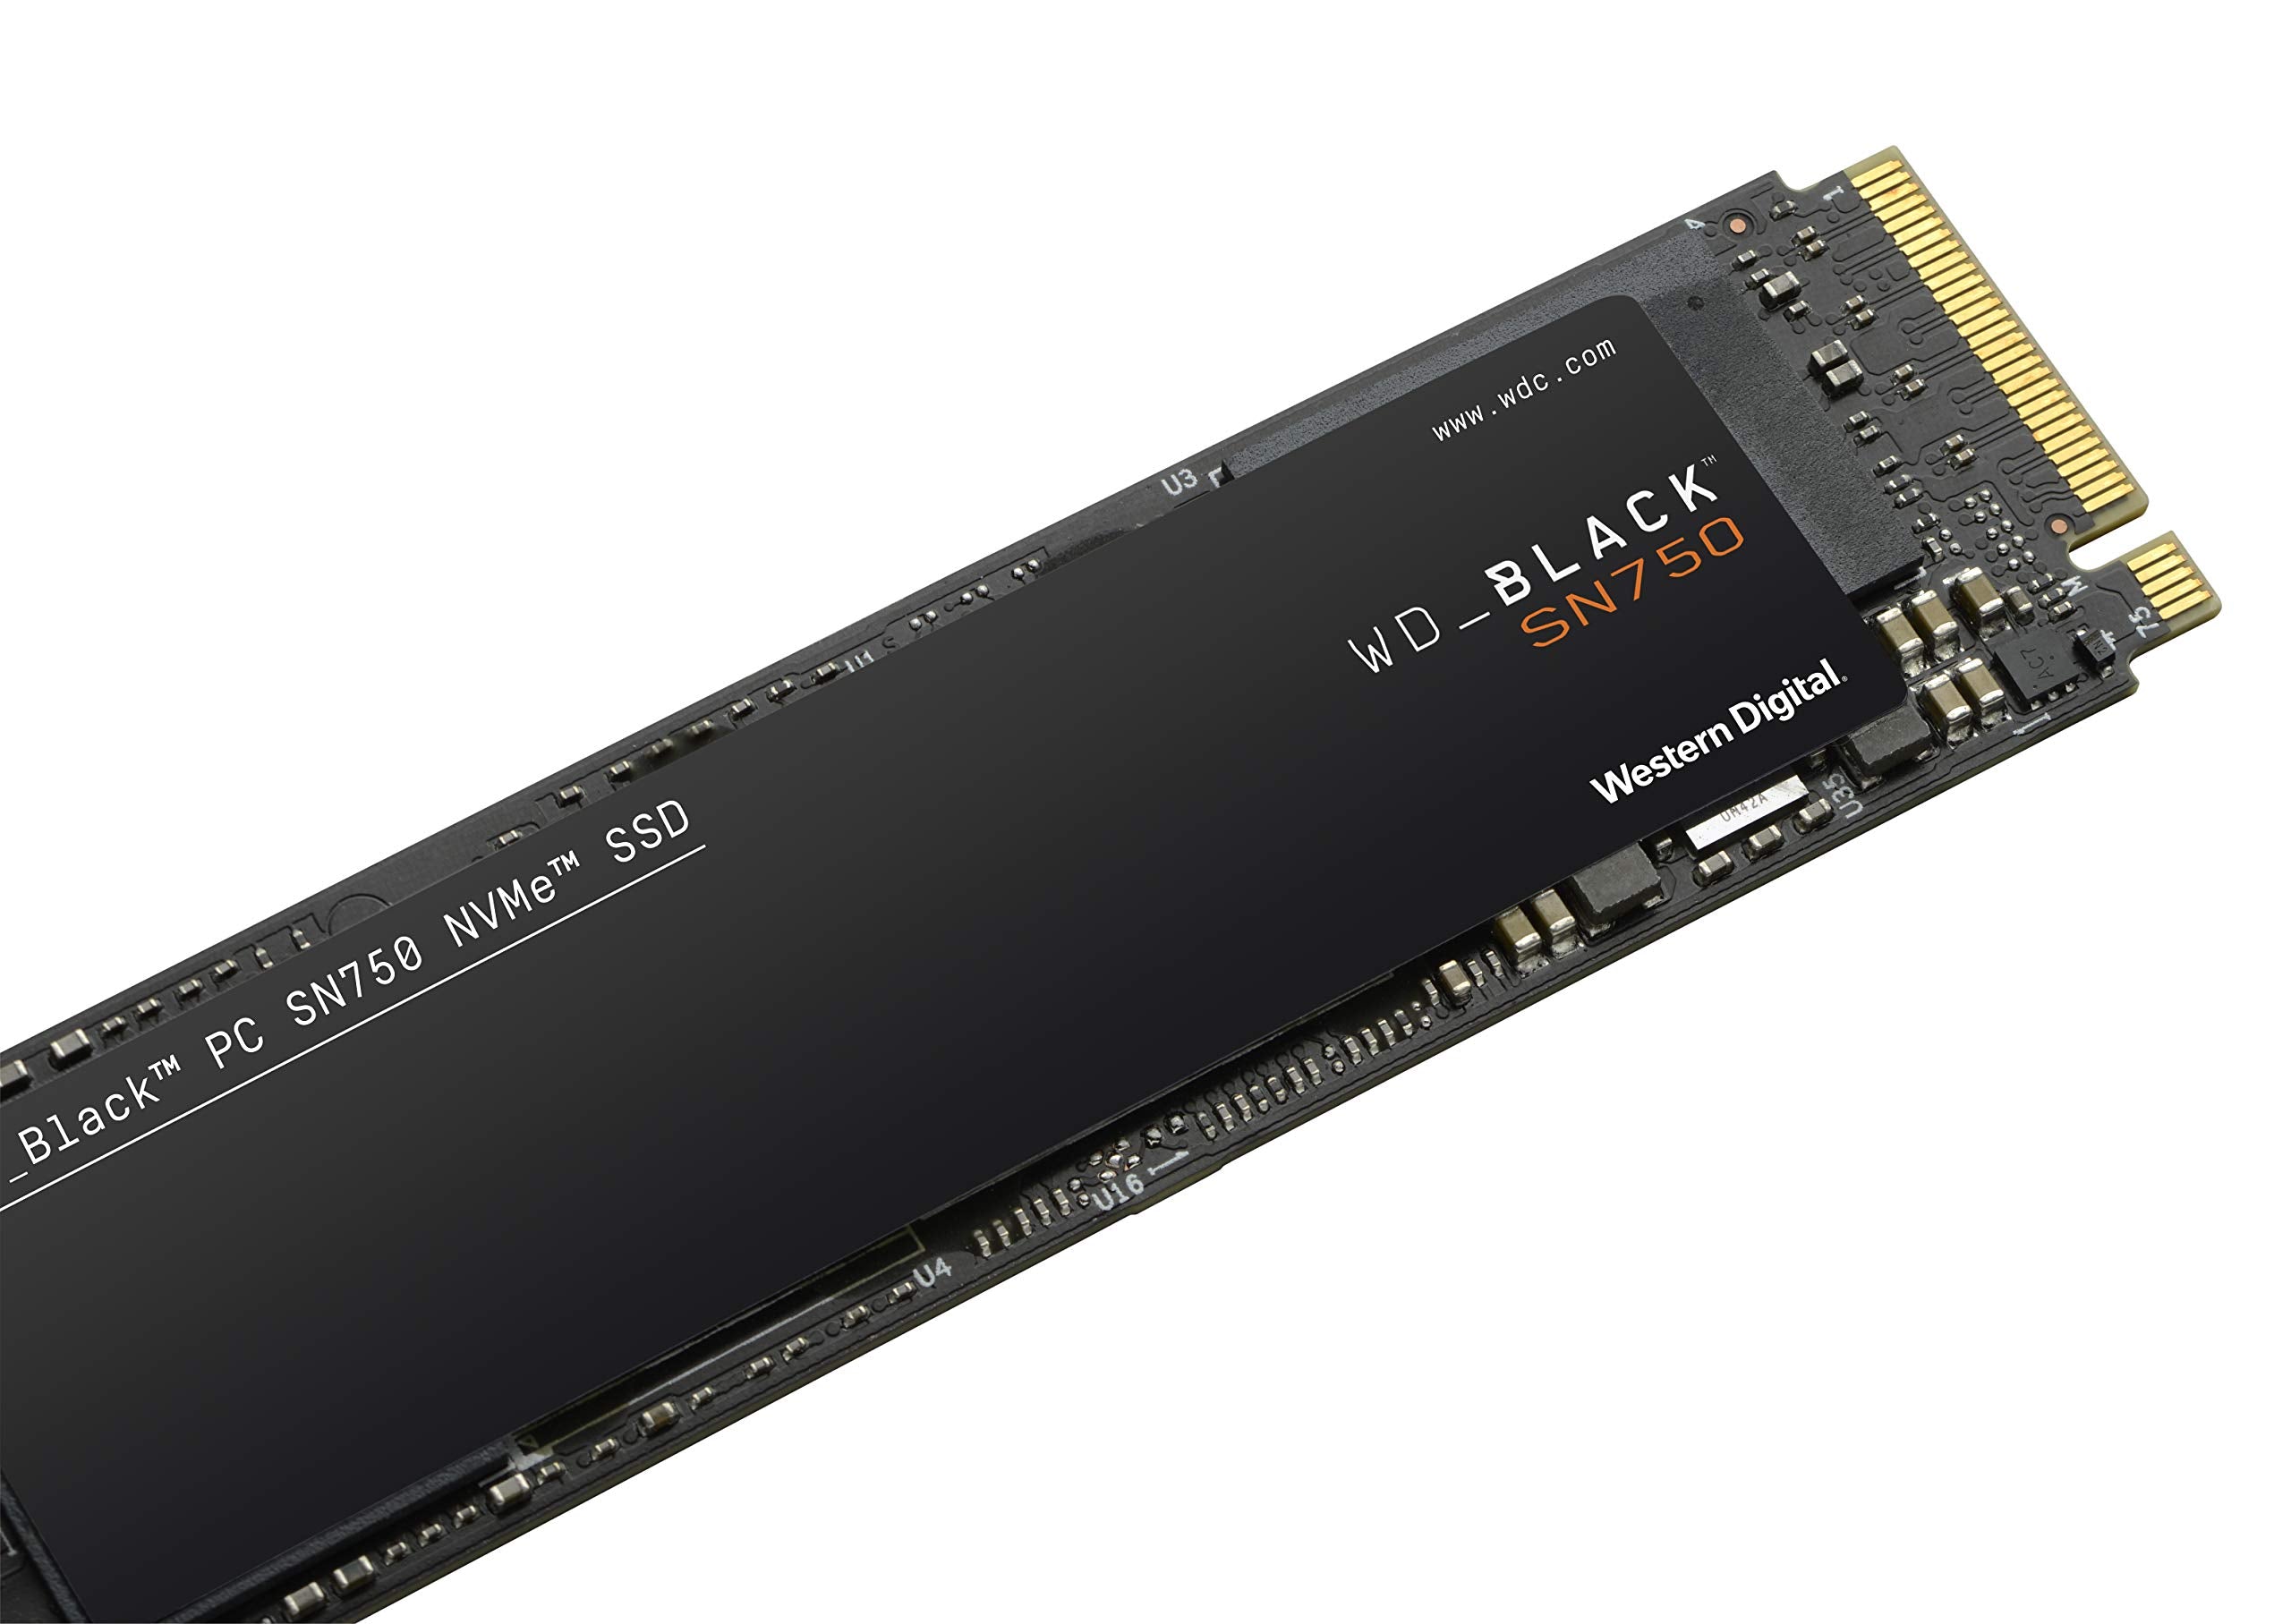 WD Black SN750 500GB  NVMe Internal Gaming SSD - Gen3 PCIe, M.2 2280, 3D NAND - WDS500G3X0C (Open Box, Like New)